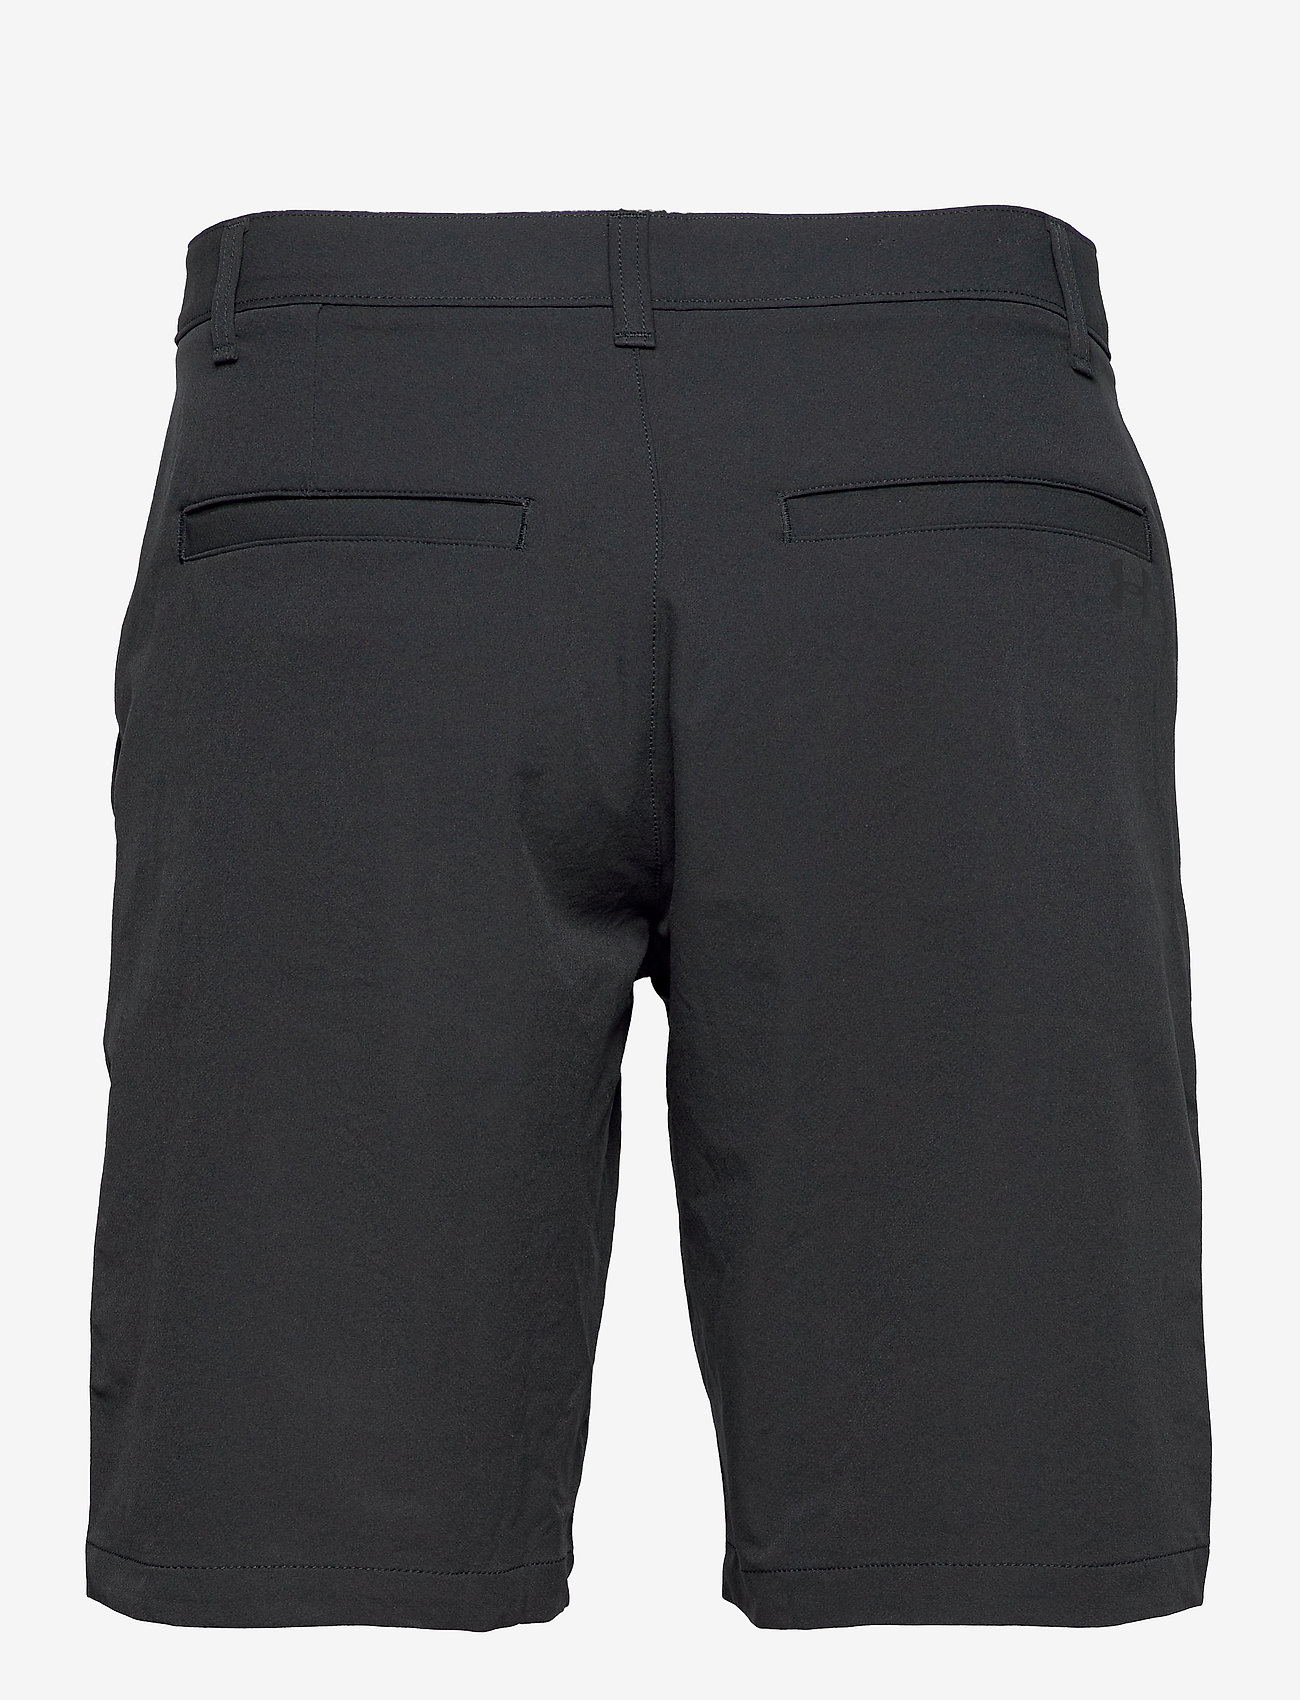 Under Armour - UA Tech Short - golf shorts - black - 1